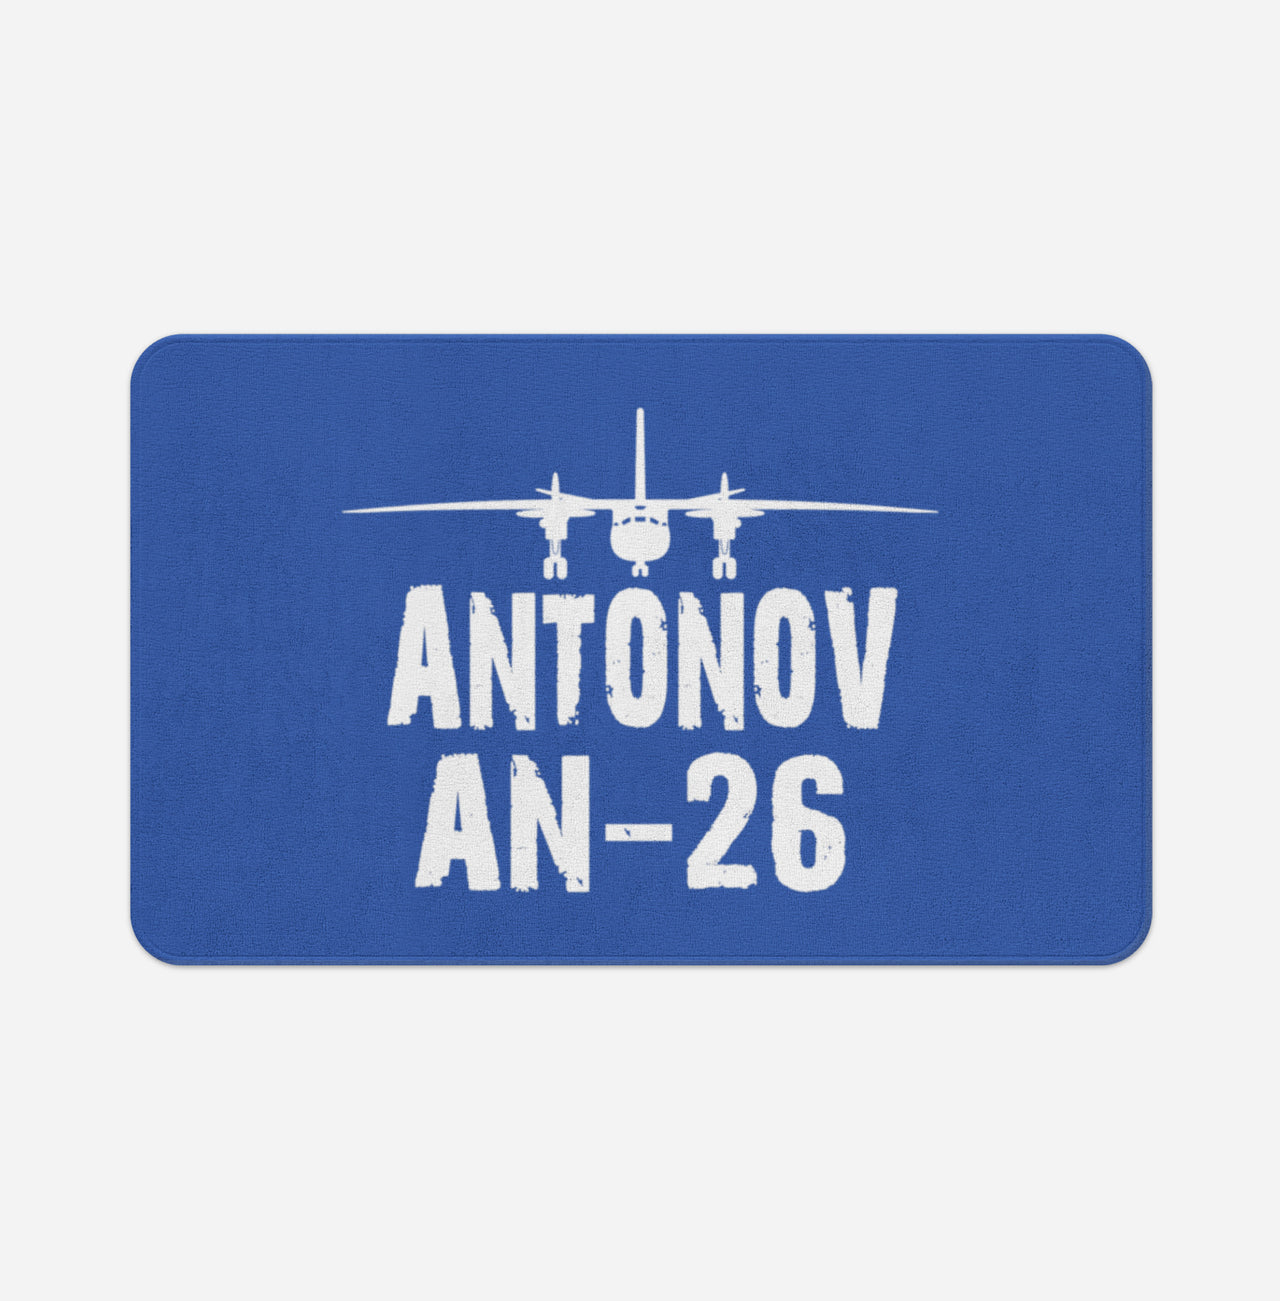 Antonov AN-26 & Plane Designed Bath Mats